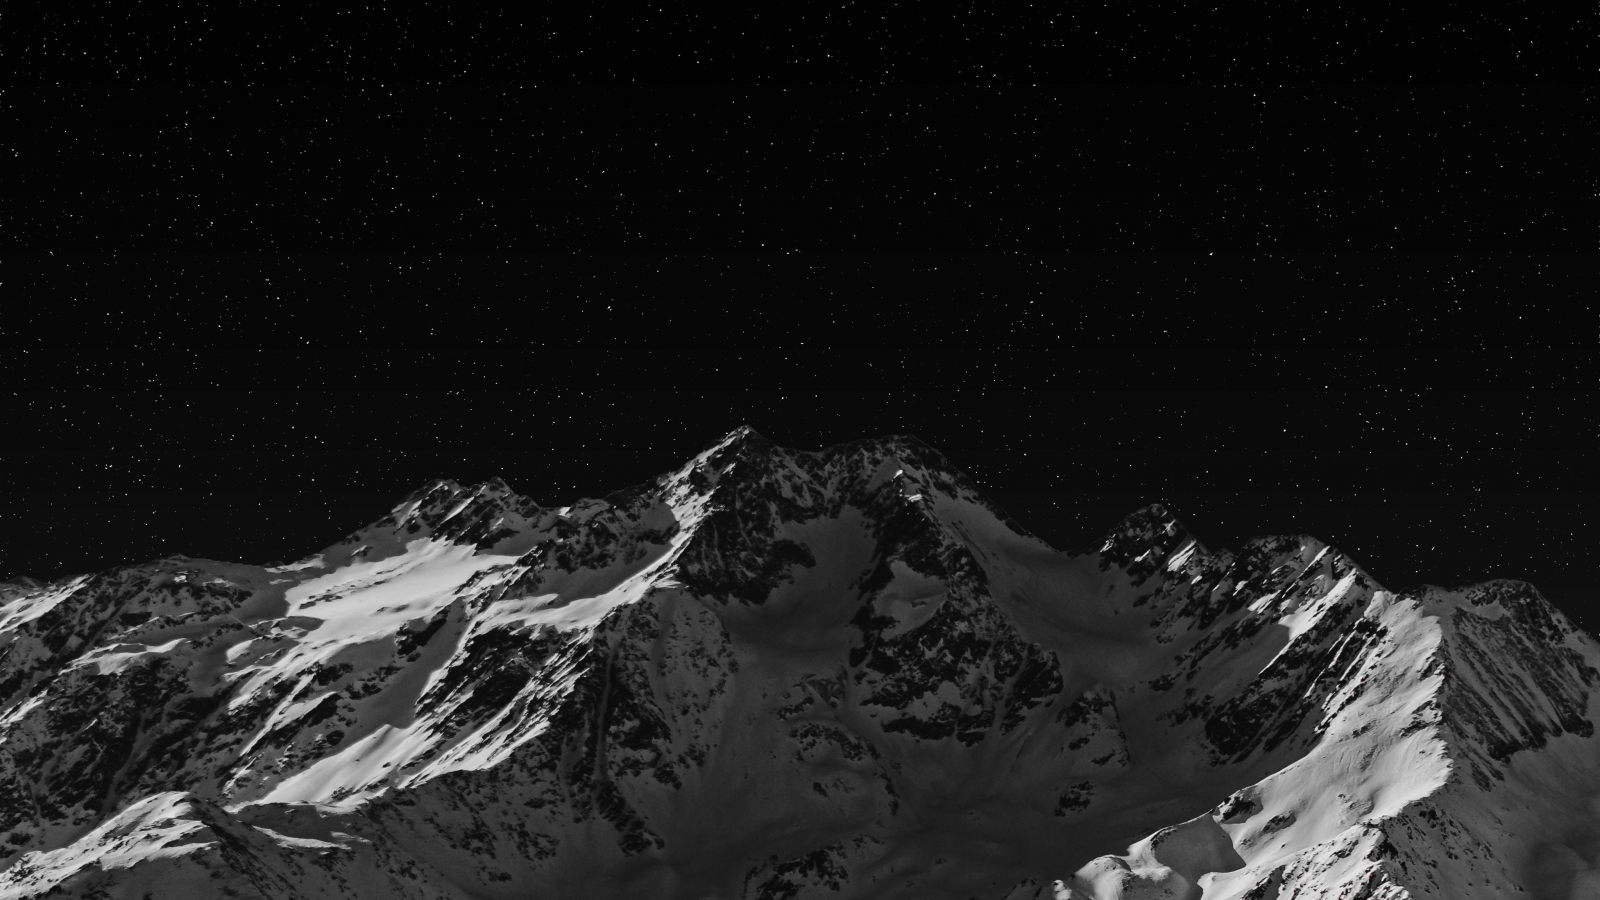 Download wallpaper 1600x900 mountain, dark, nature, 16:9 widescreen  1600x900 hd background, 23995